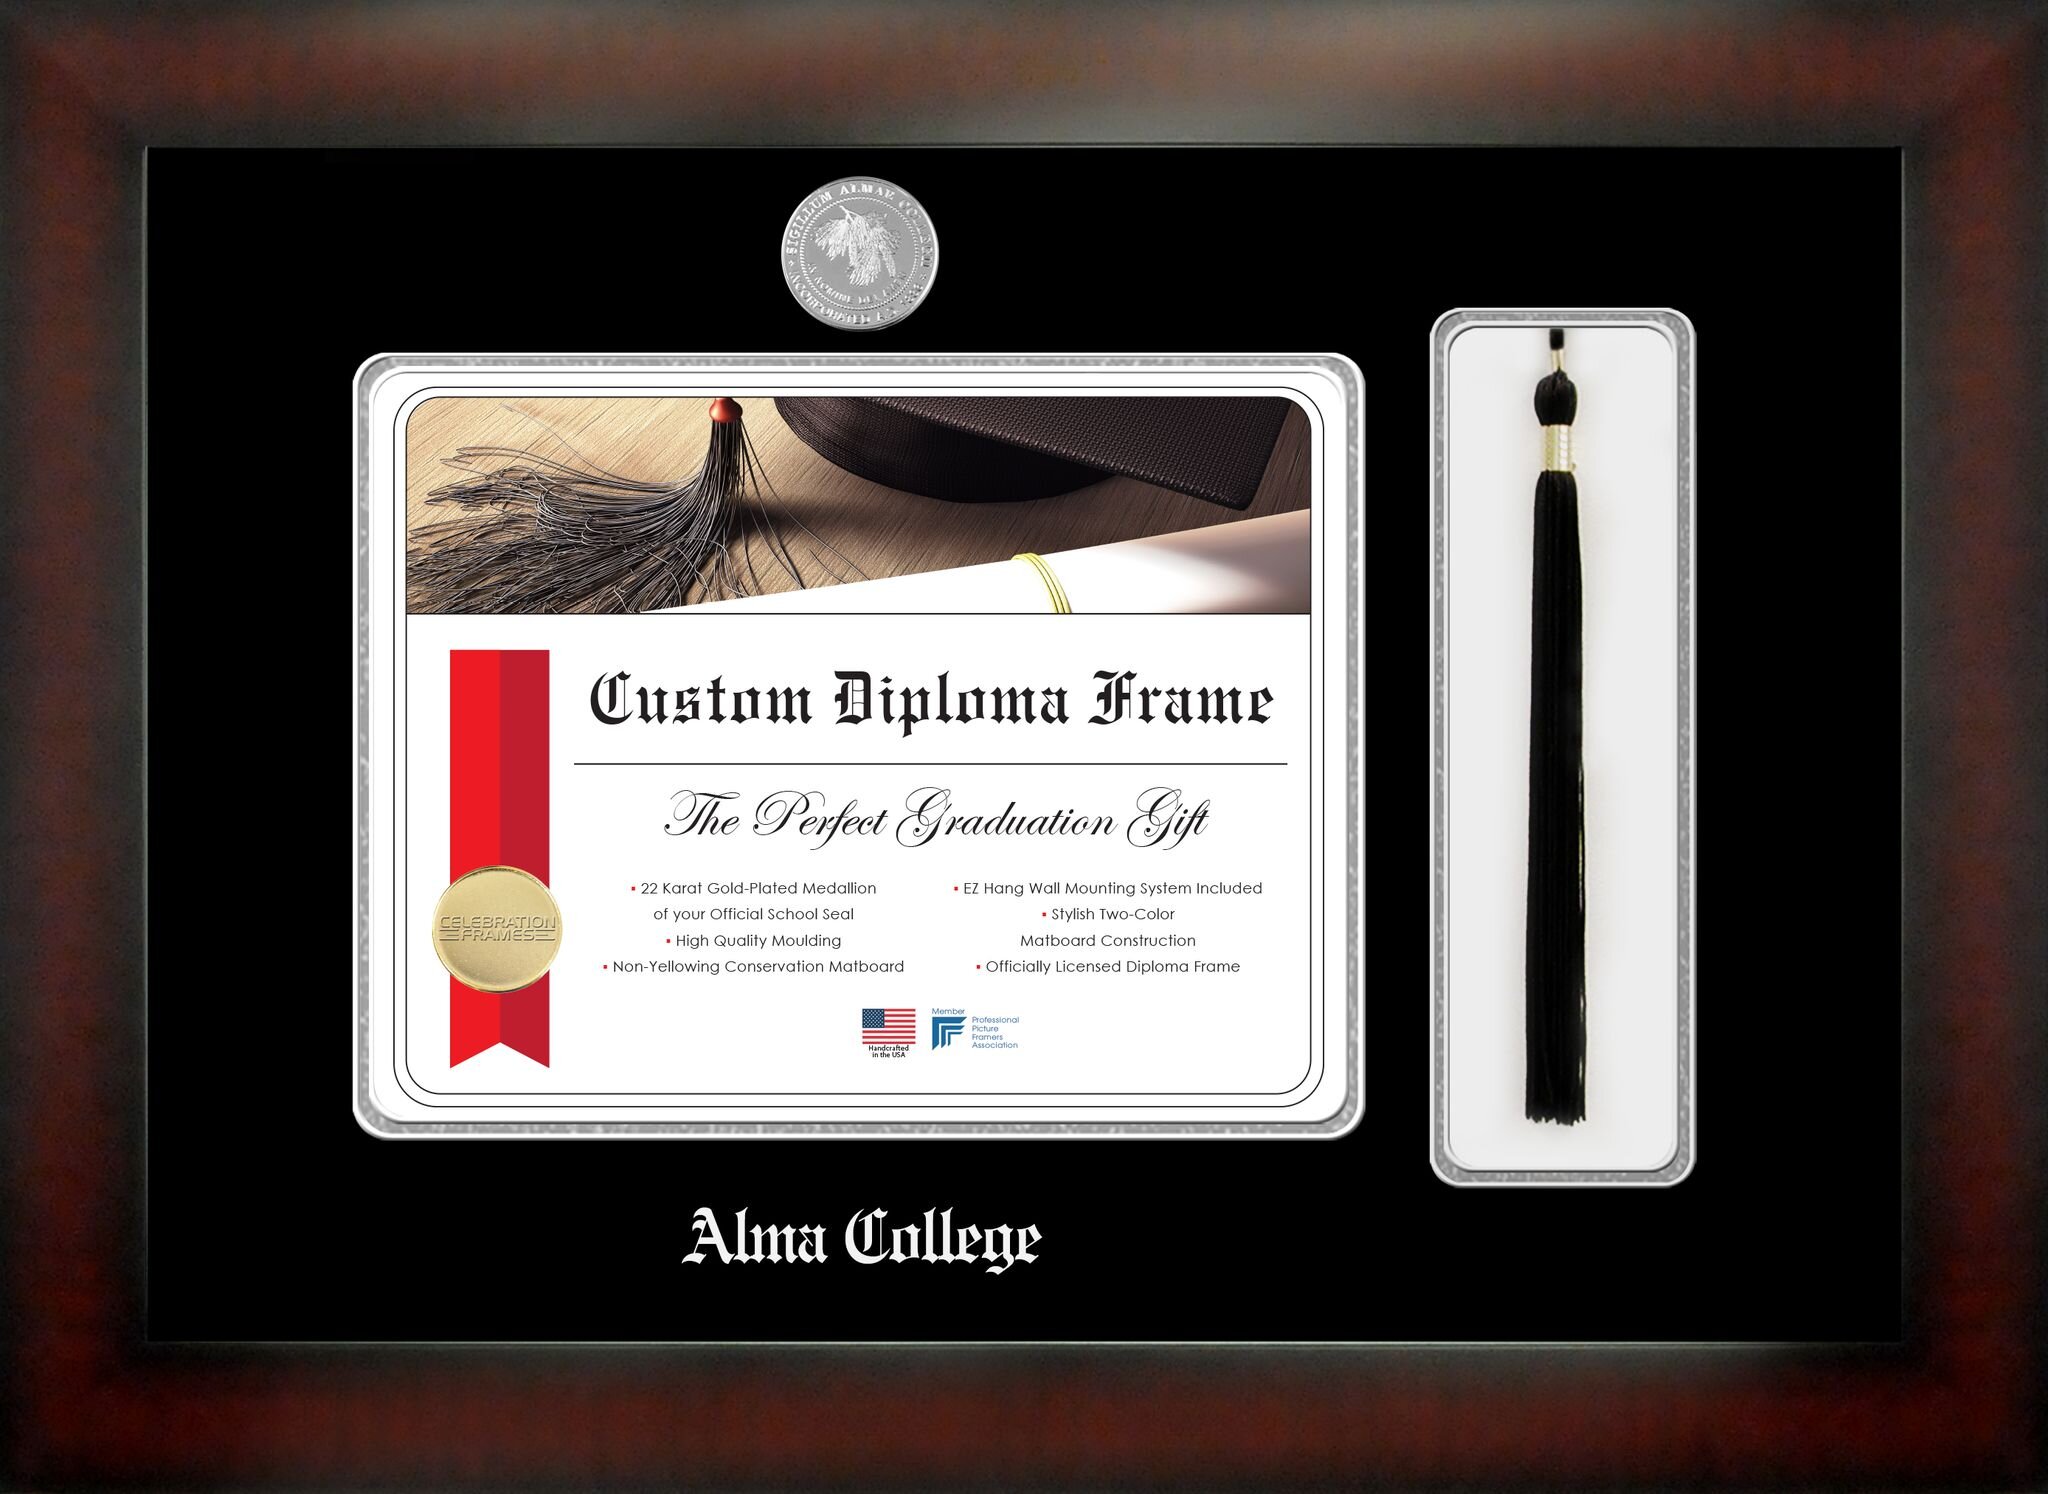 Campus Images UNLV Running Rebels 11w x 8.5h Spirit Graduate Frame Diploma Frame 